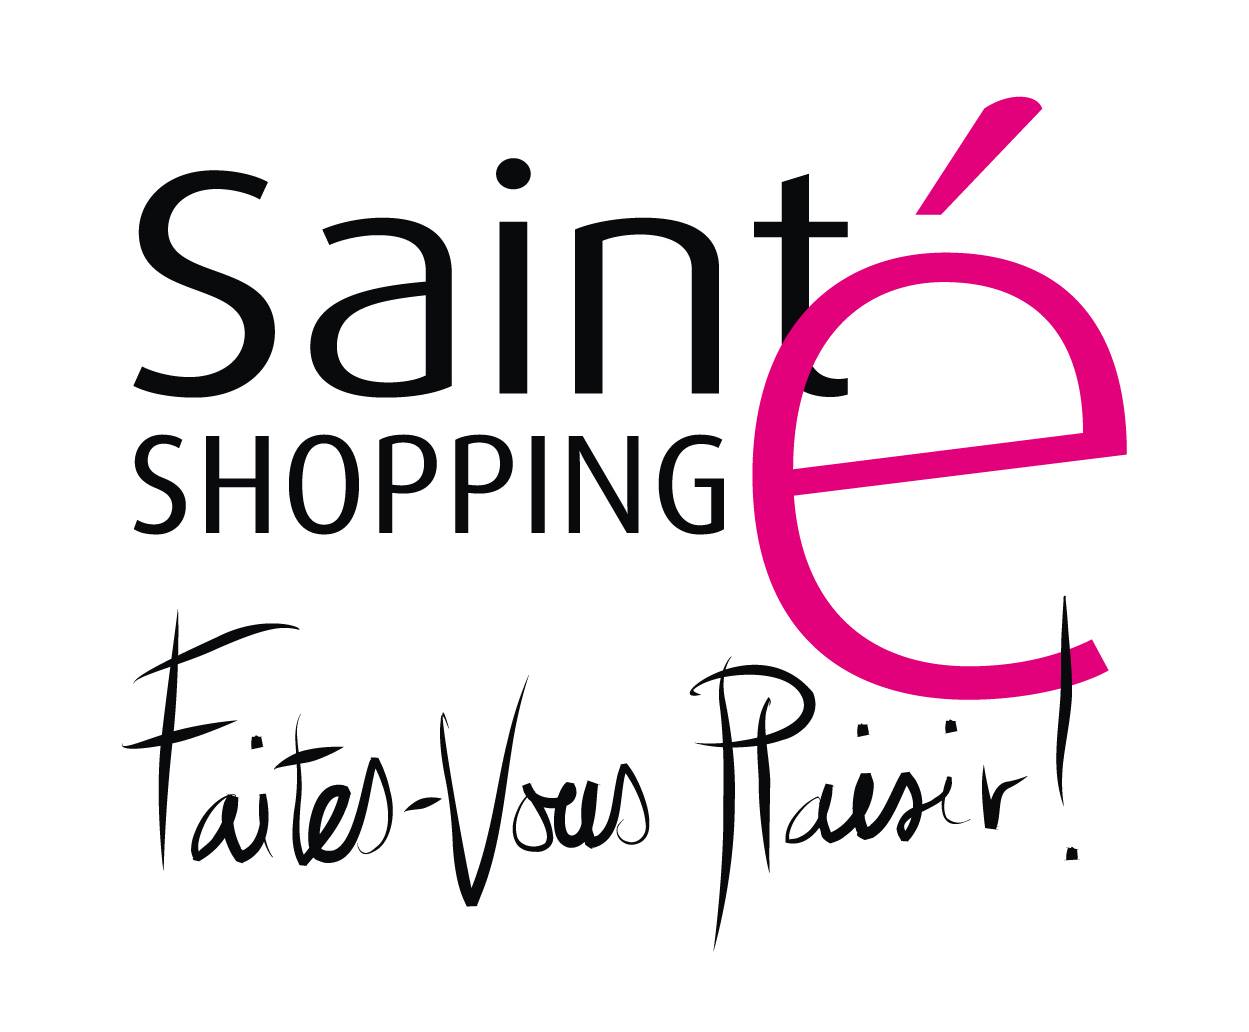 https://fetedulivre.saint-etienne.fr/wp-content/uploads/2021/09/sainte-shopping.jpg